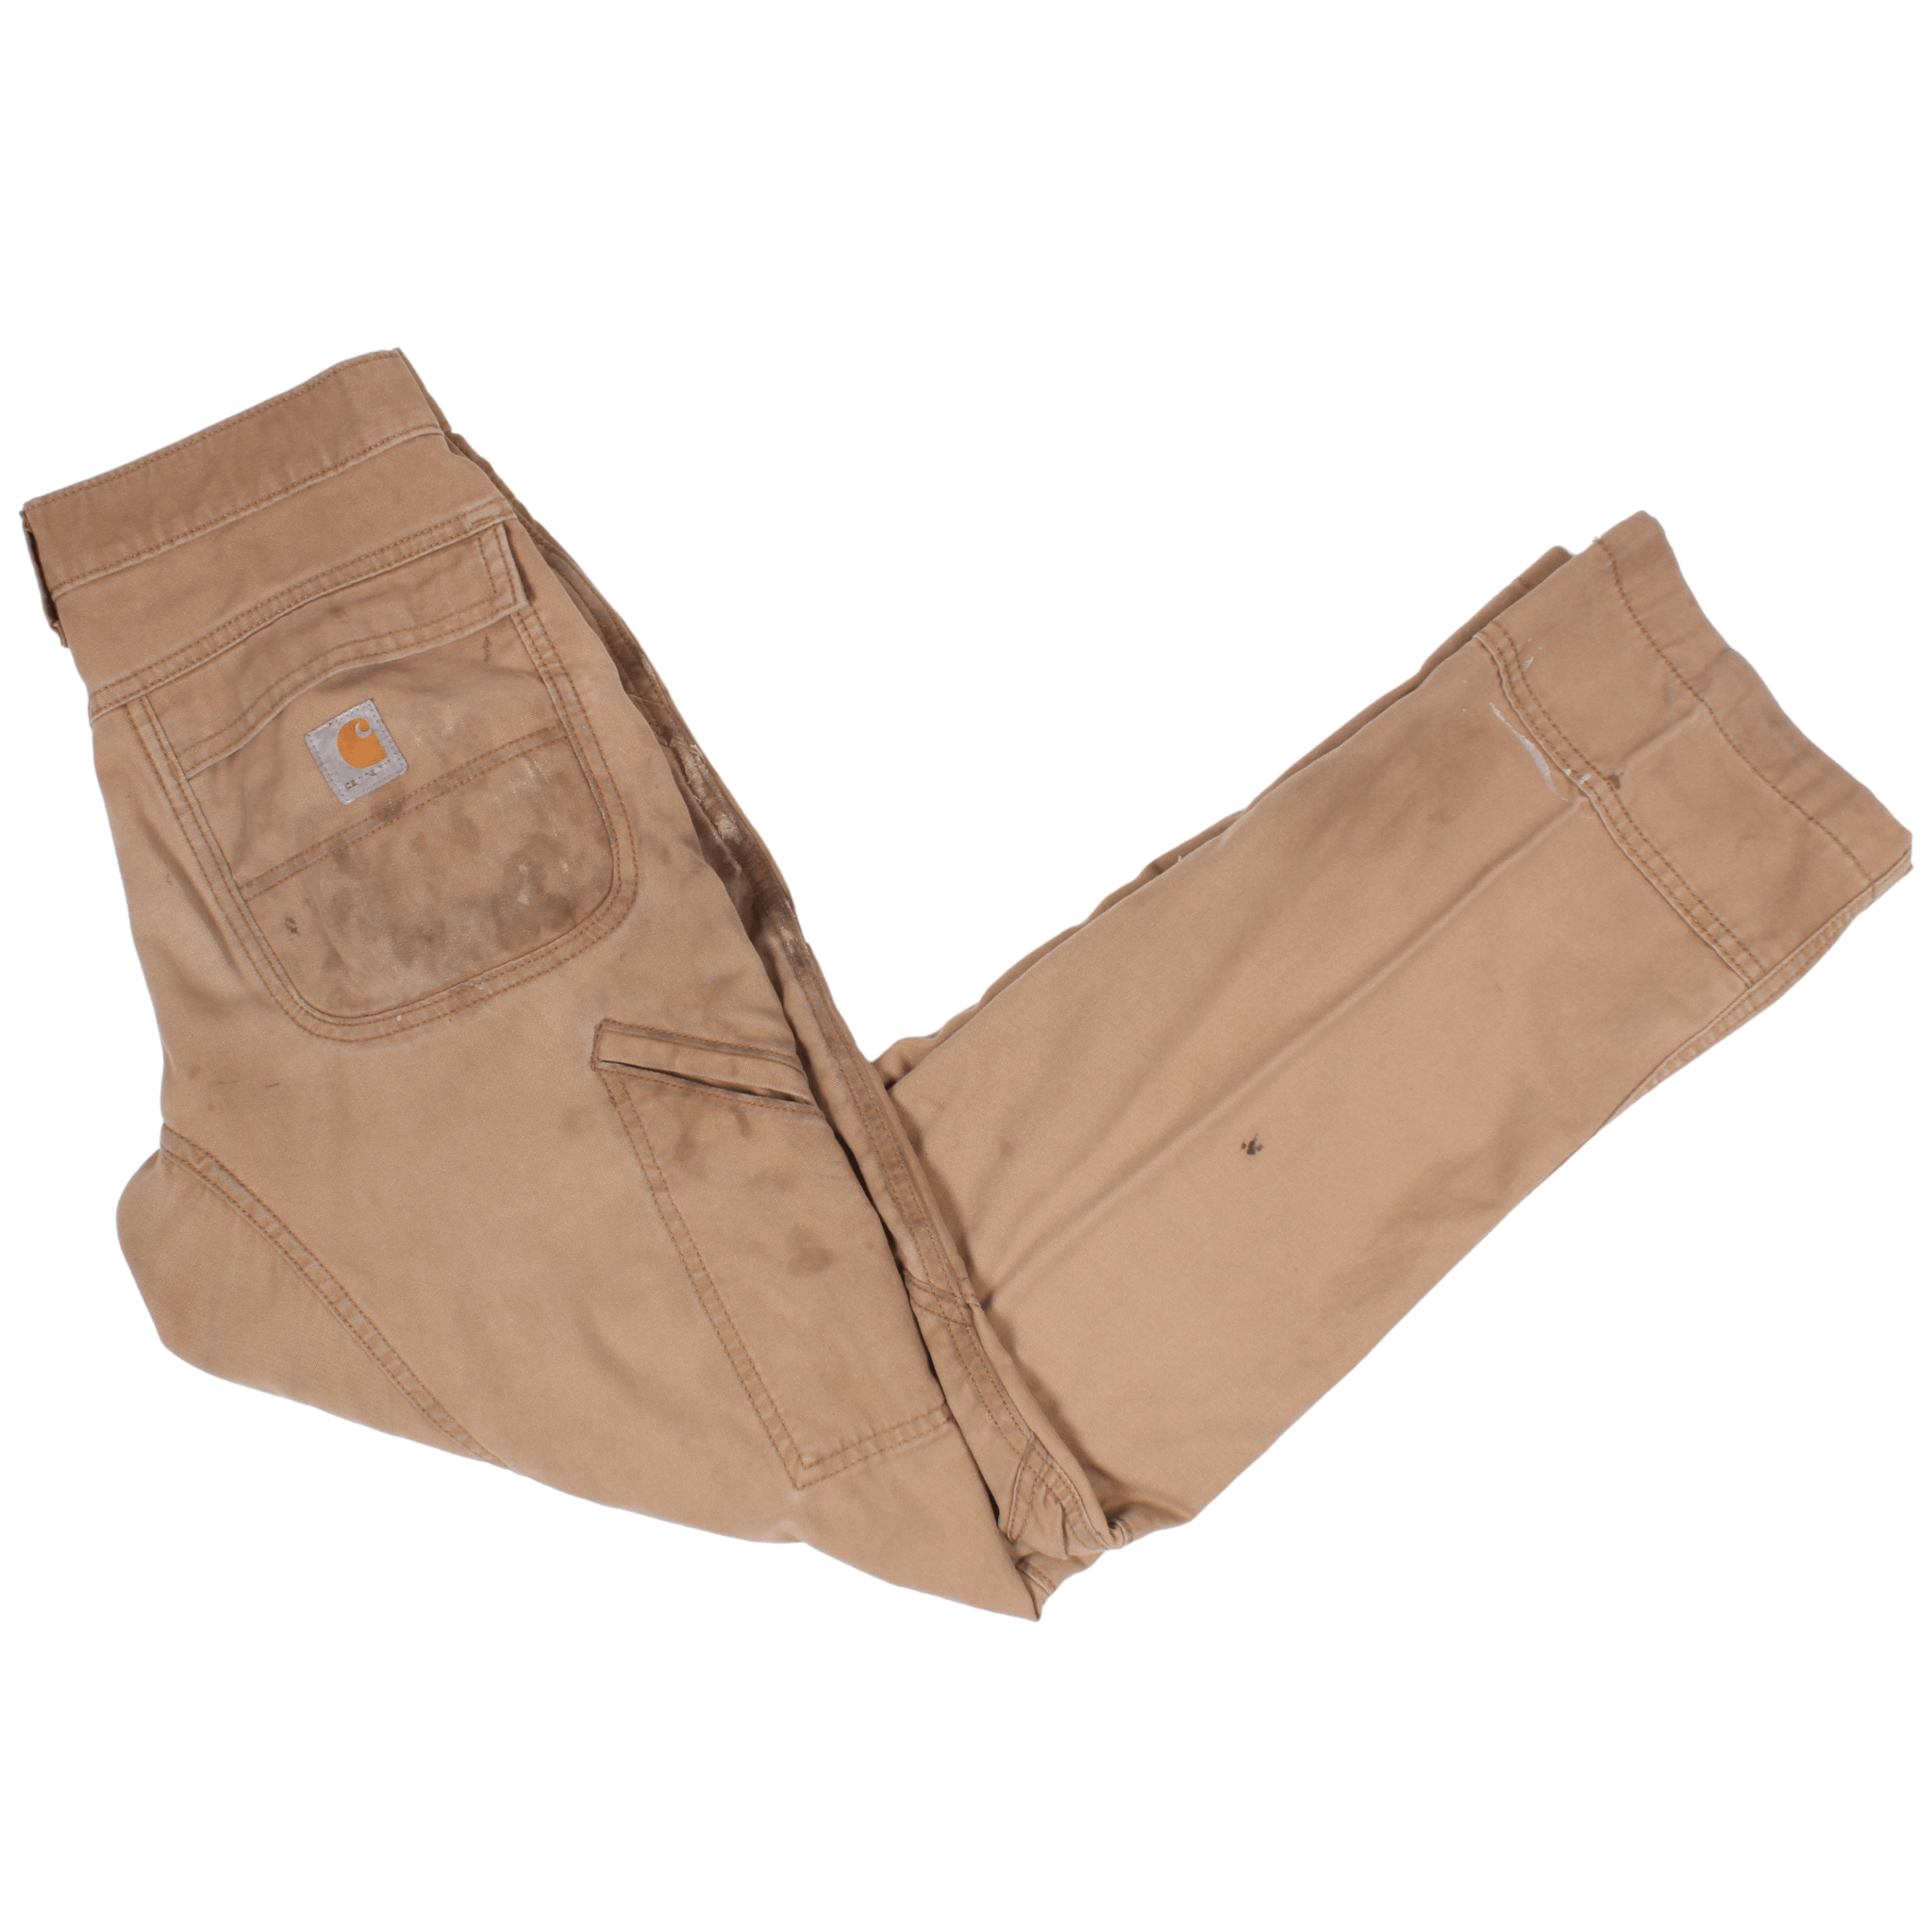 Vintage Carhartt Workwear Trousers (30